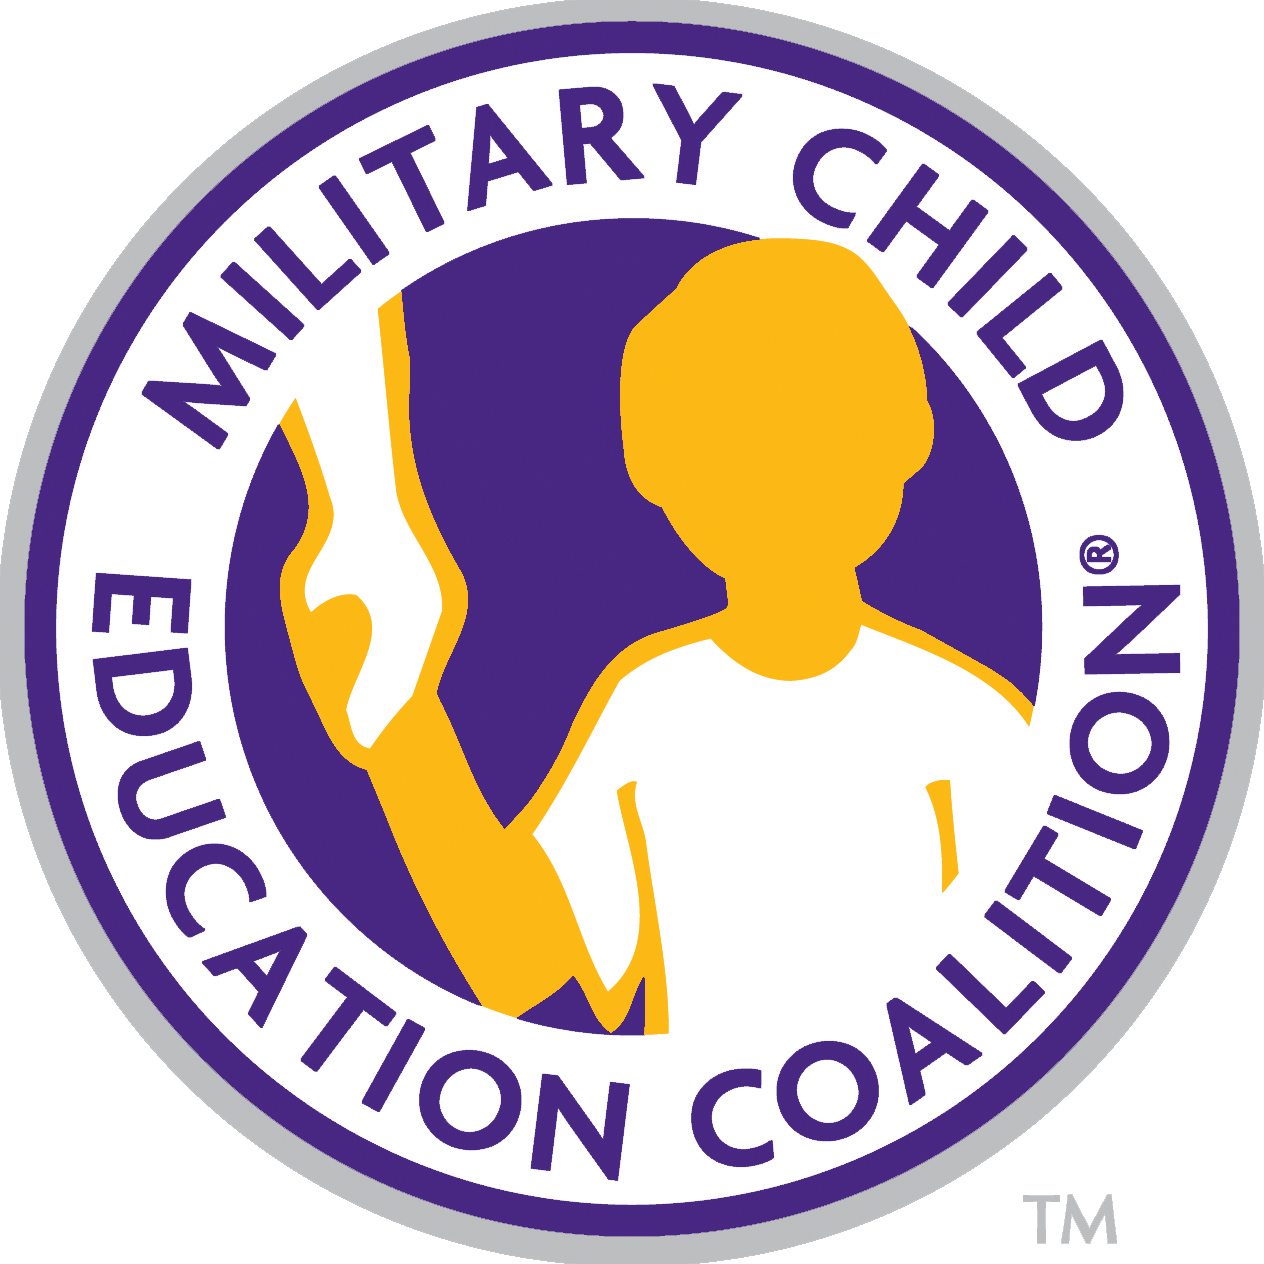 Military Child Education Coalition logo